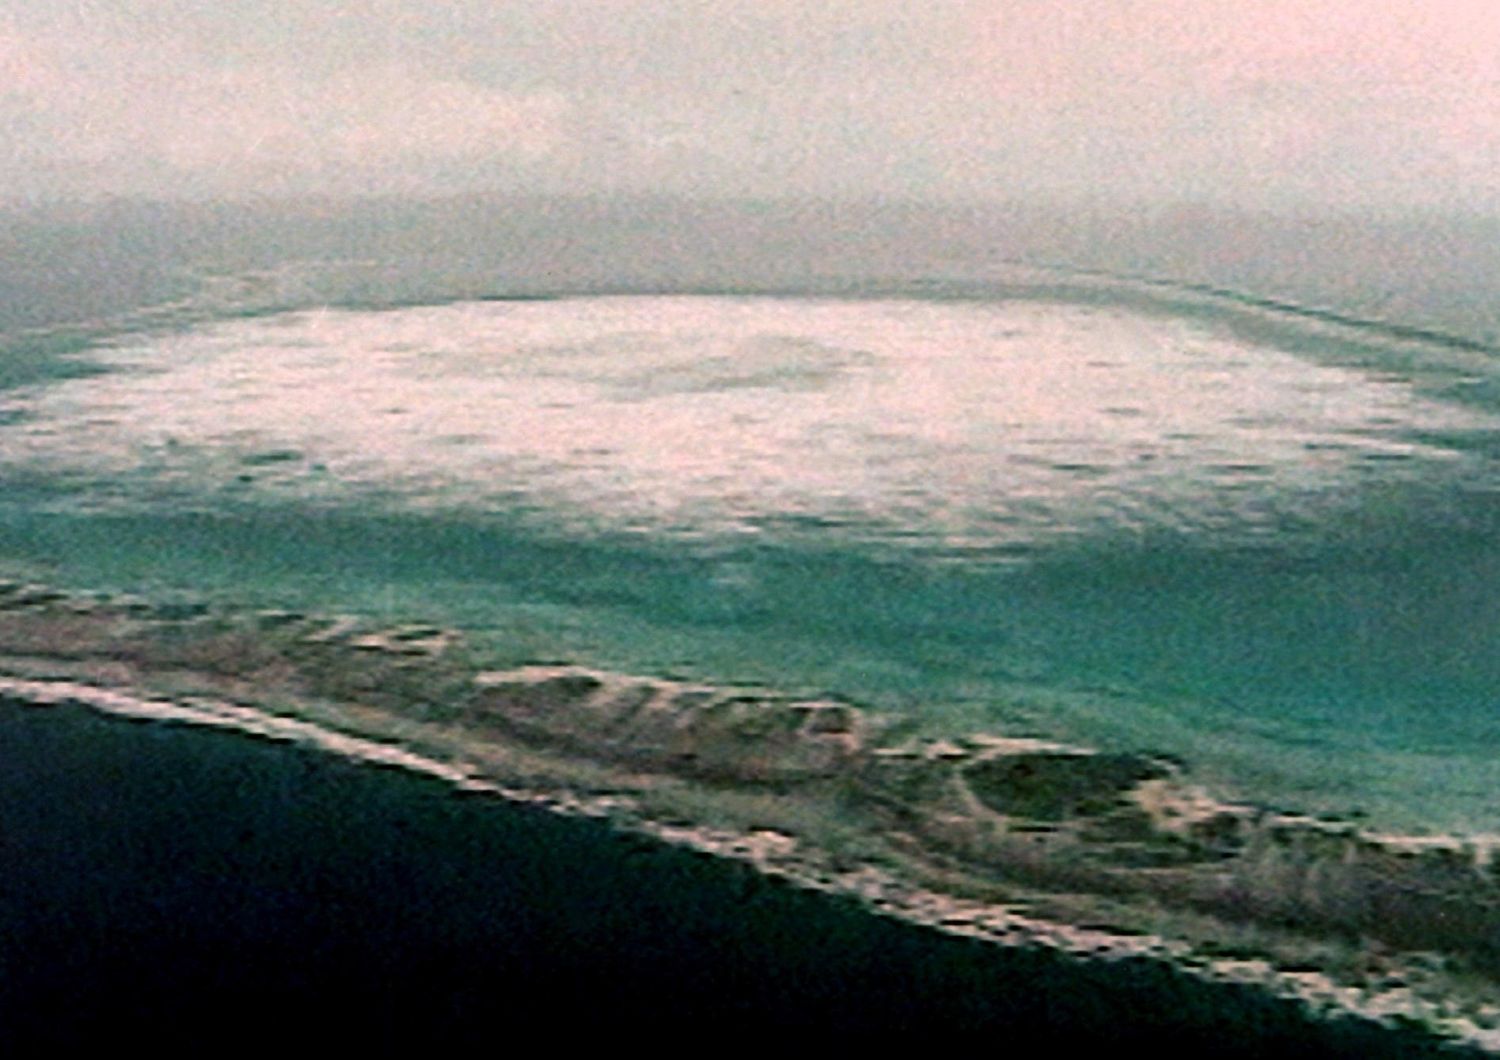 Mururoa,  prova sotterranea nucleare in atollo francese Fangataufa (Afp)&nbsp;